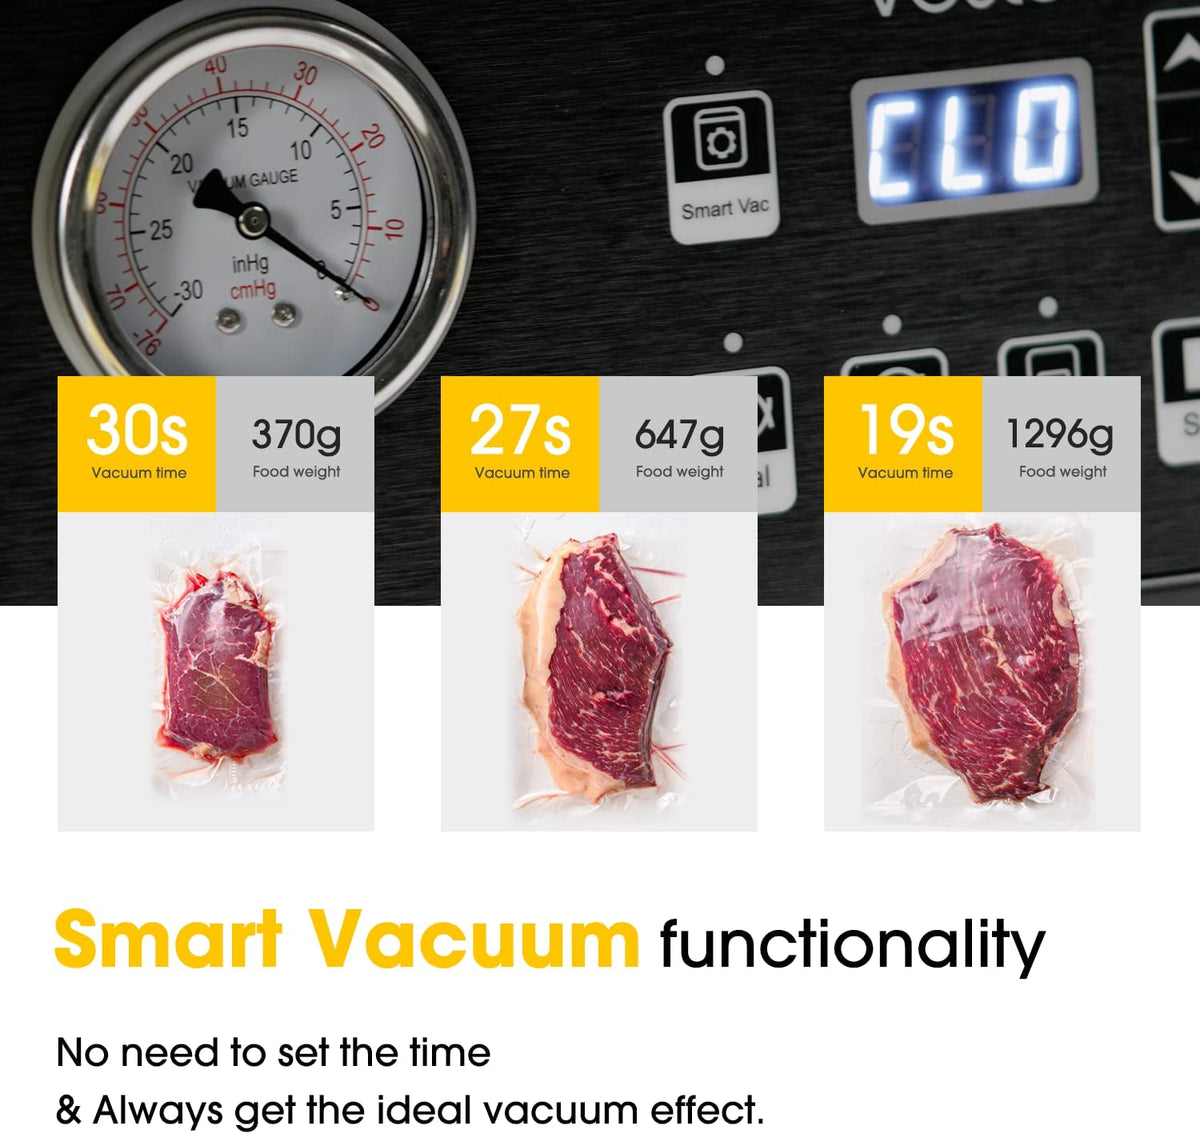 A picture describing the Smart Vac feature.